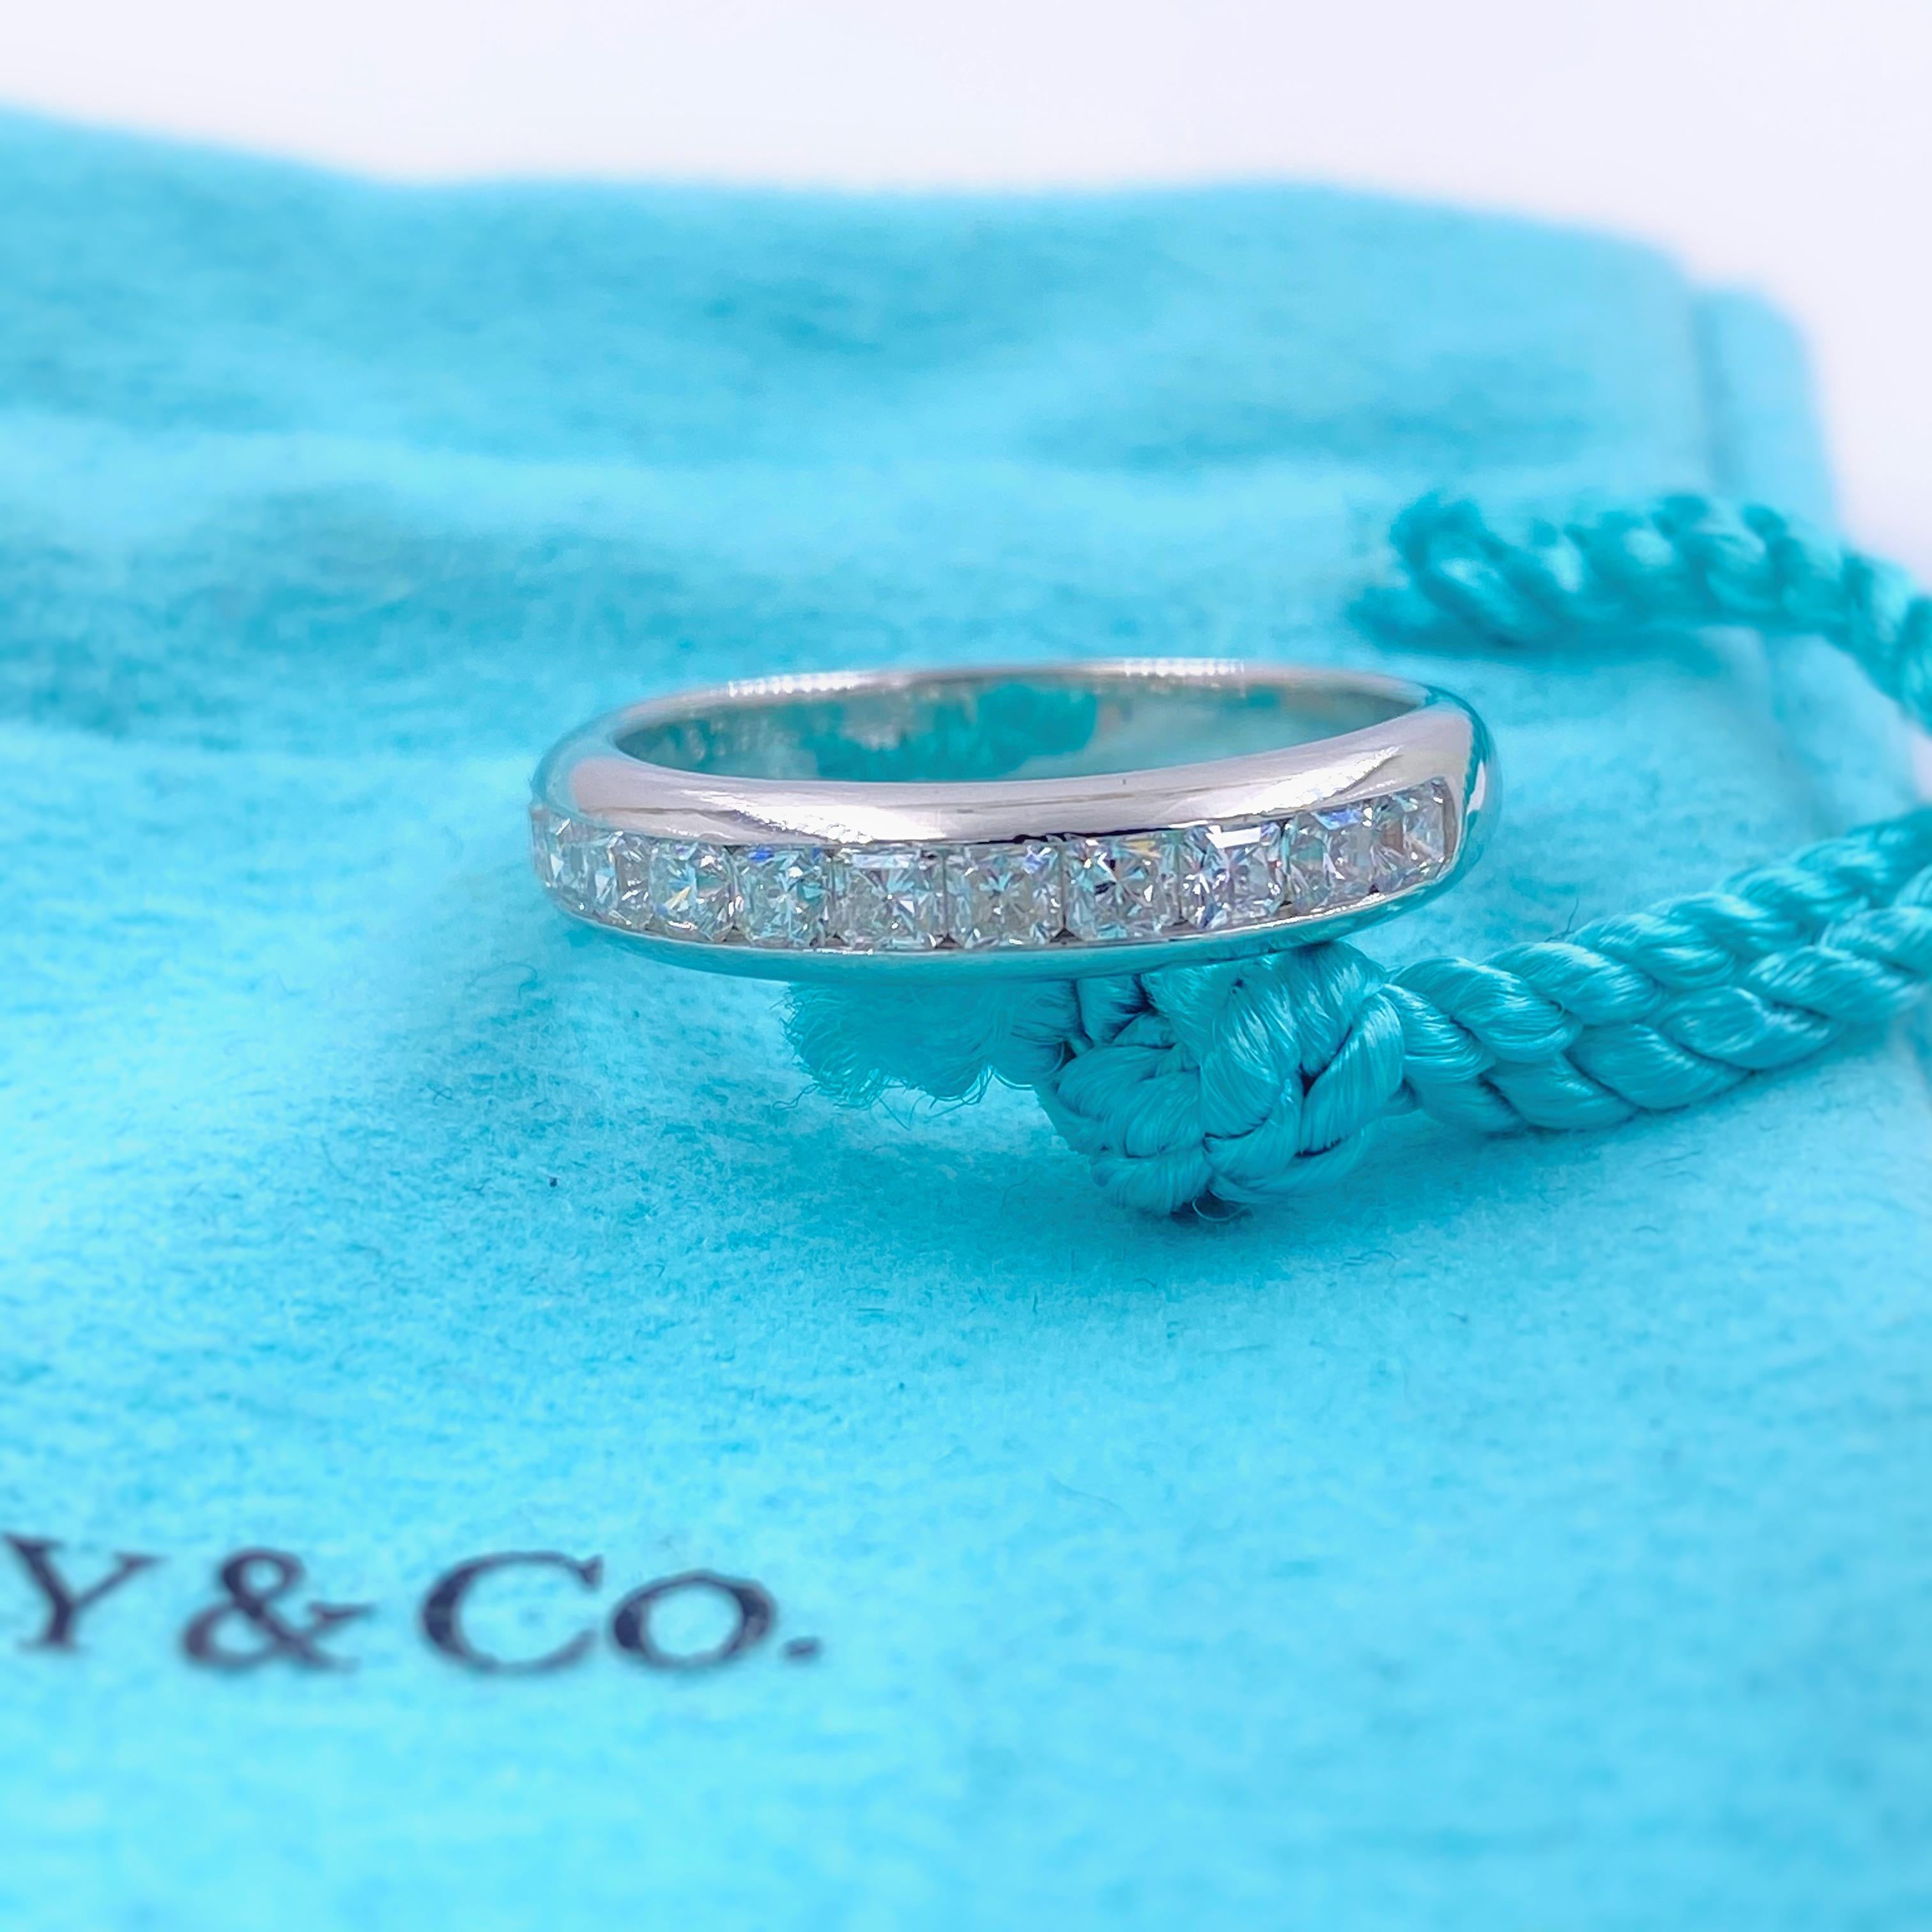 Tiffany & Co Lucida Diamond Wedding Band Ring
Style:  Lucida 13 Stone Band
Metal:  Platinum PT950
Size:  6.5 sizable
Measurements:  4 MM
TCW:  0.65 tcw
Main Diamond:  13 Lucida Diamonds
Color & Clarity:  F - G / VS2
Hallmark:  ©TIFFANY&CO.